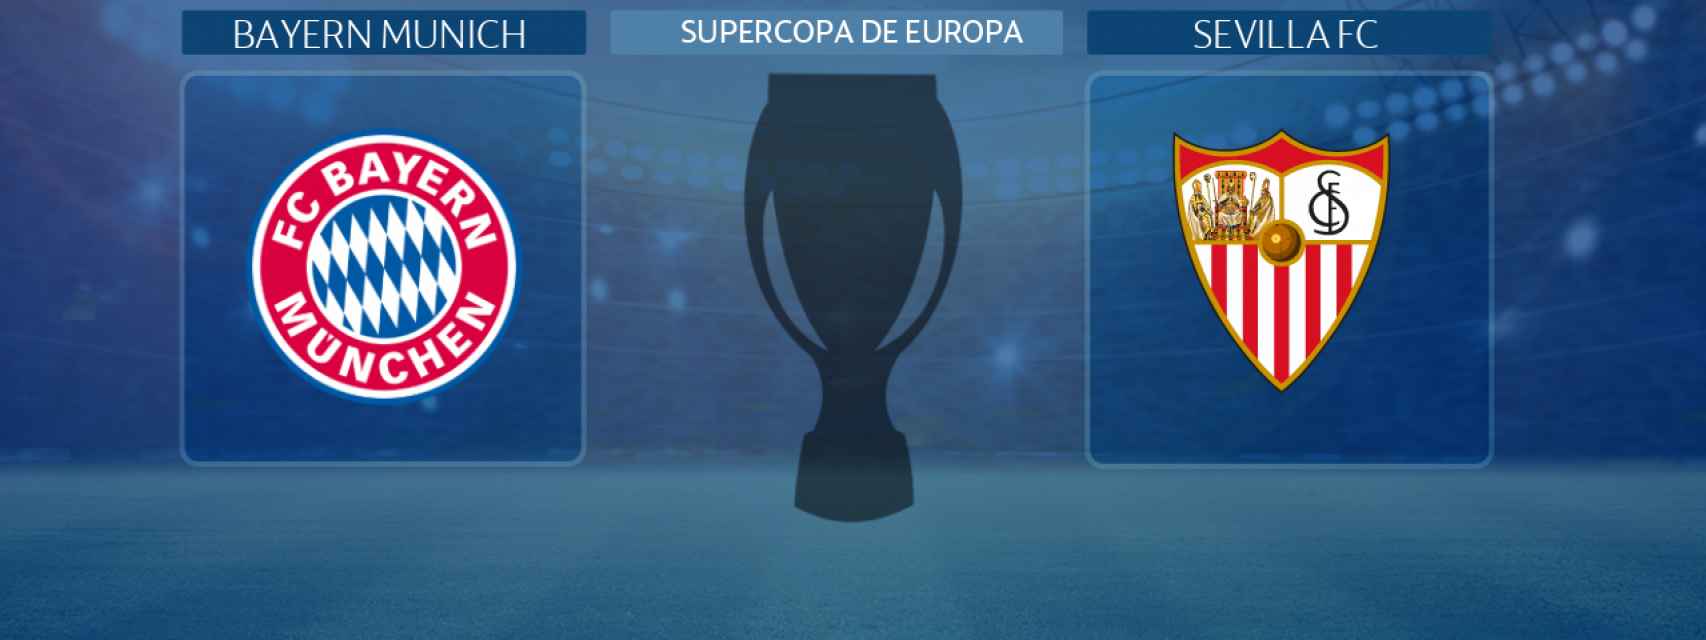 Bayern Munich - Sevilla, final de la Supercopa de Europa